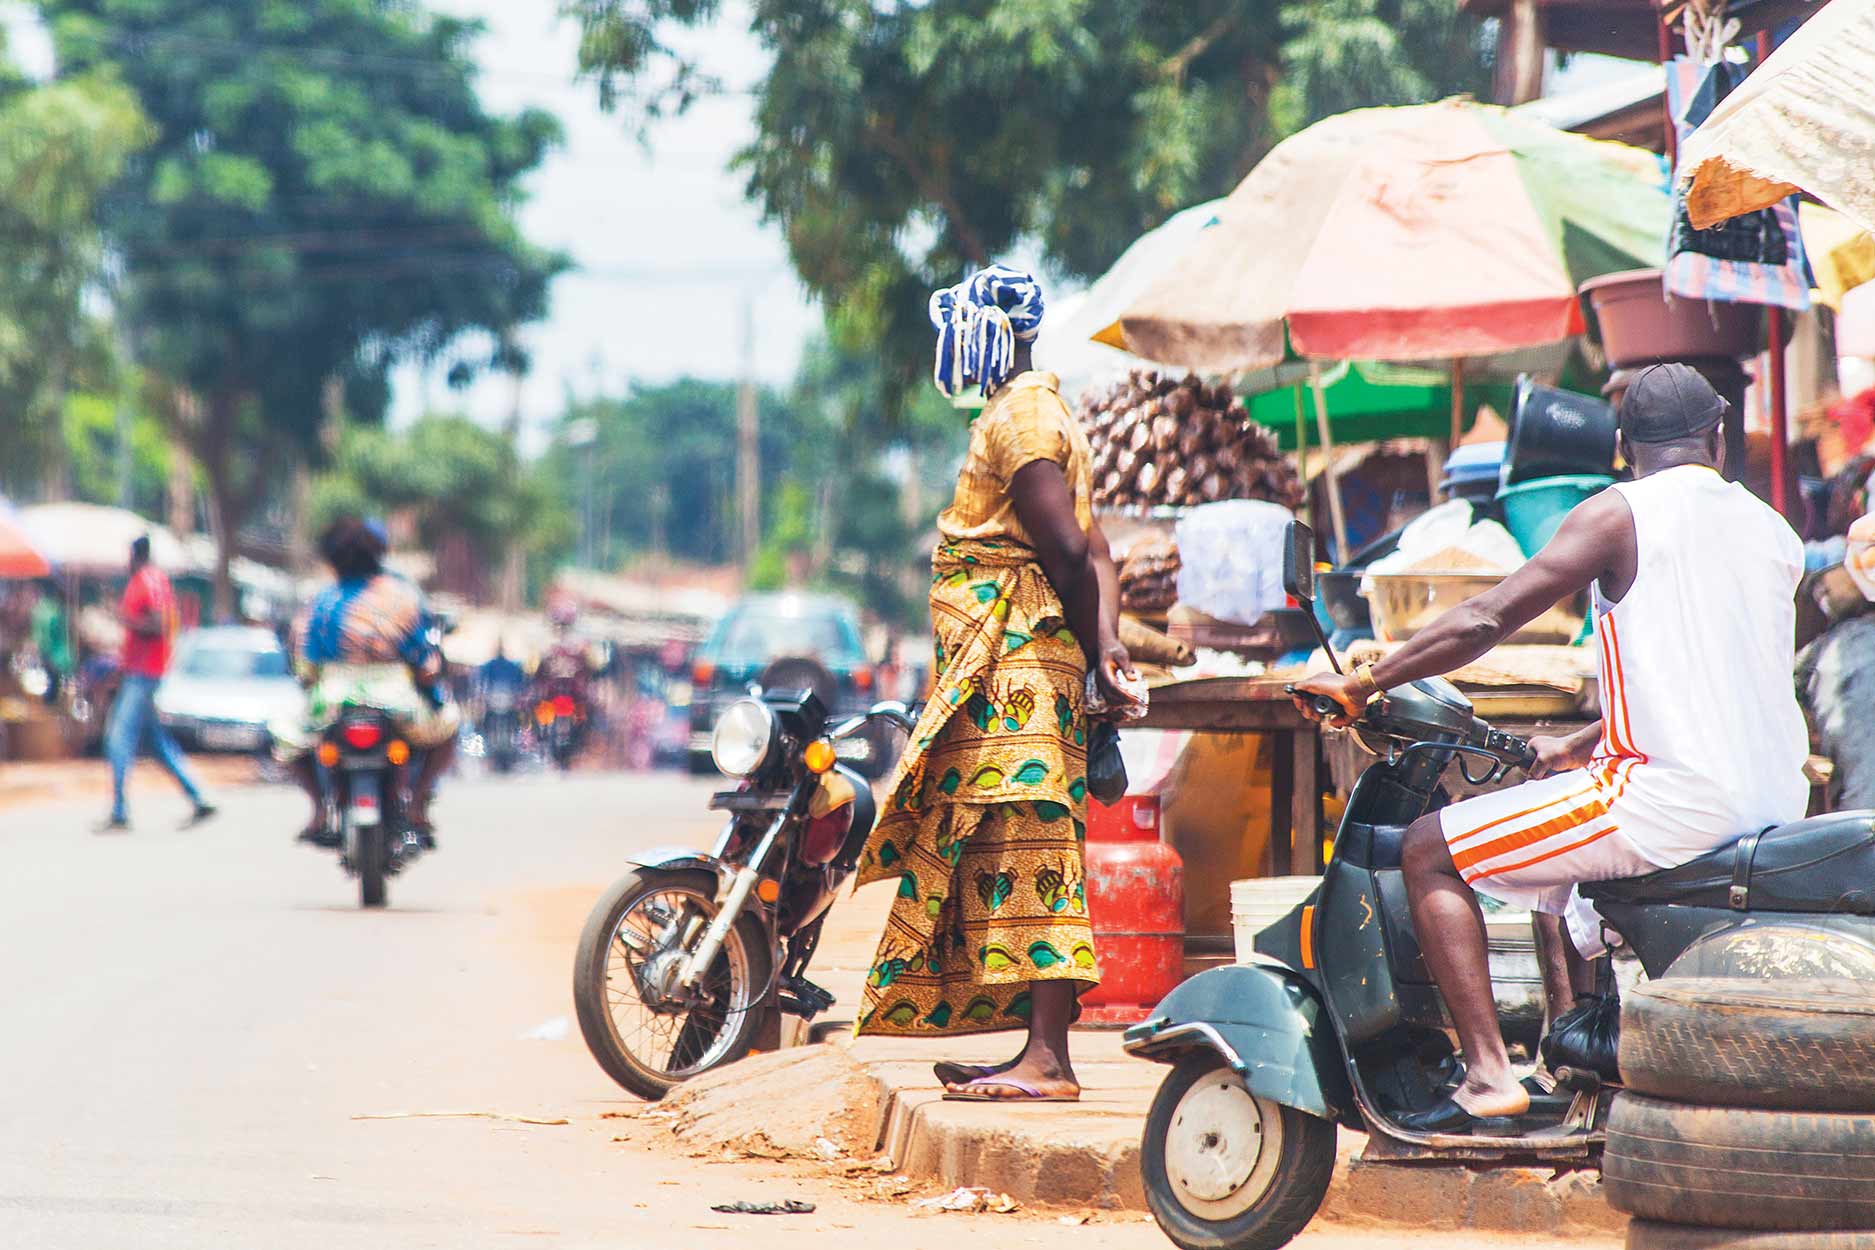 Copy of African street scene Benin